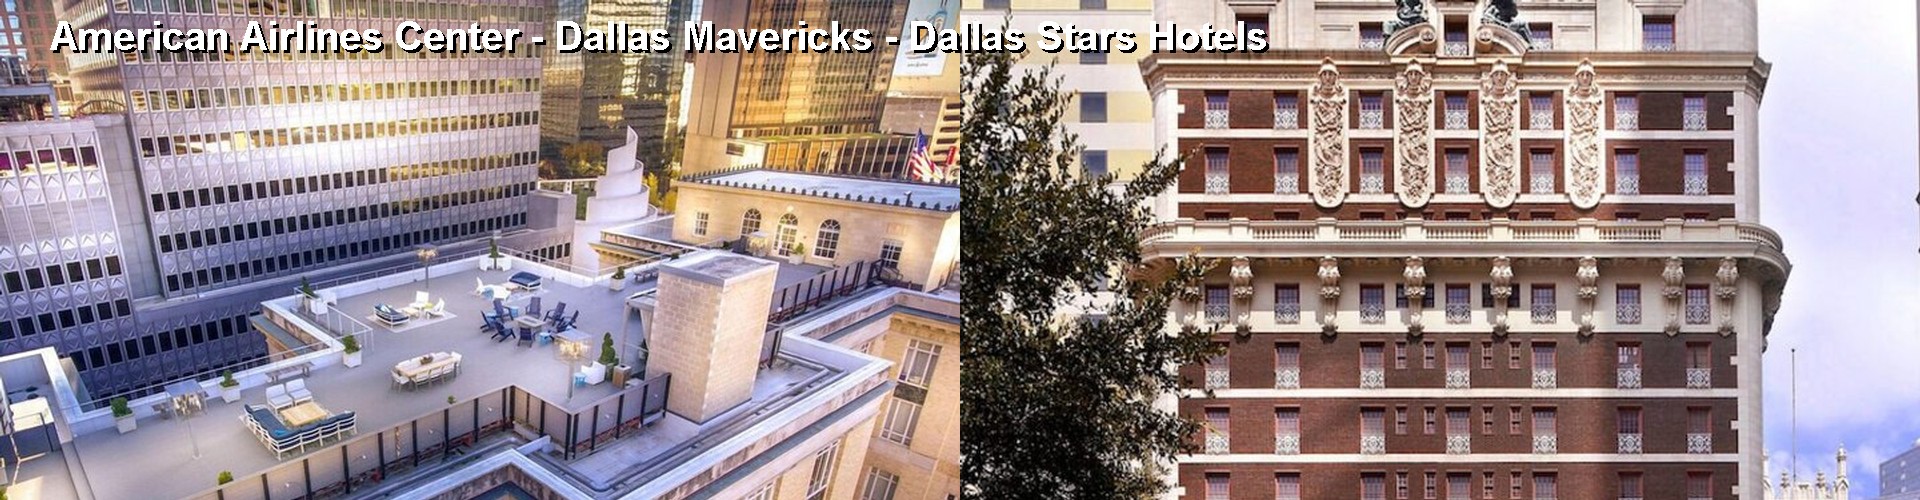 5 Best Hotels near American Airlines Center - Dallas Mavericks - Dallas Stars